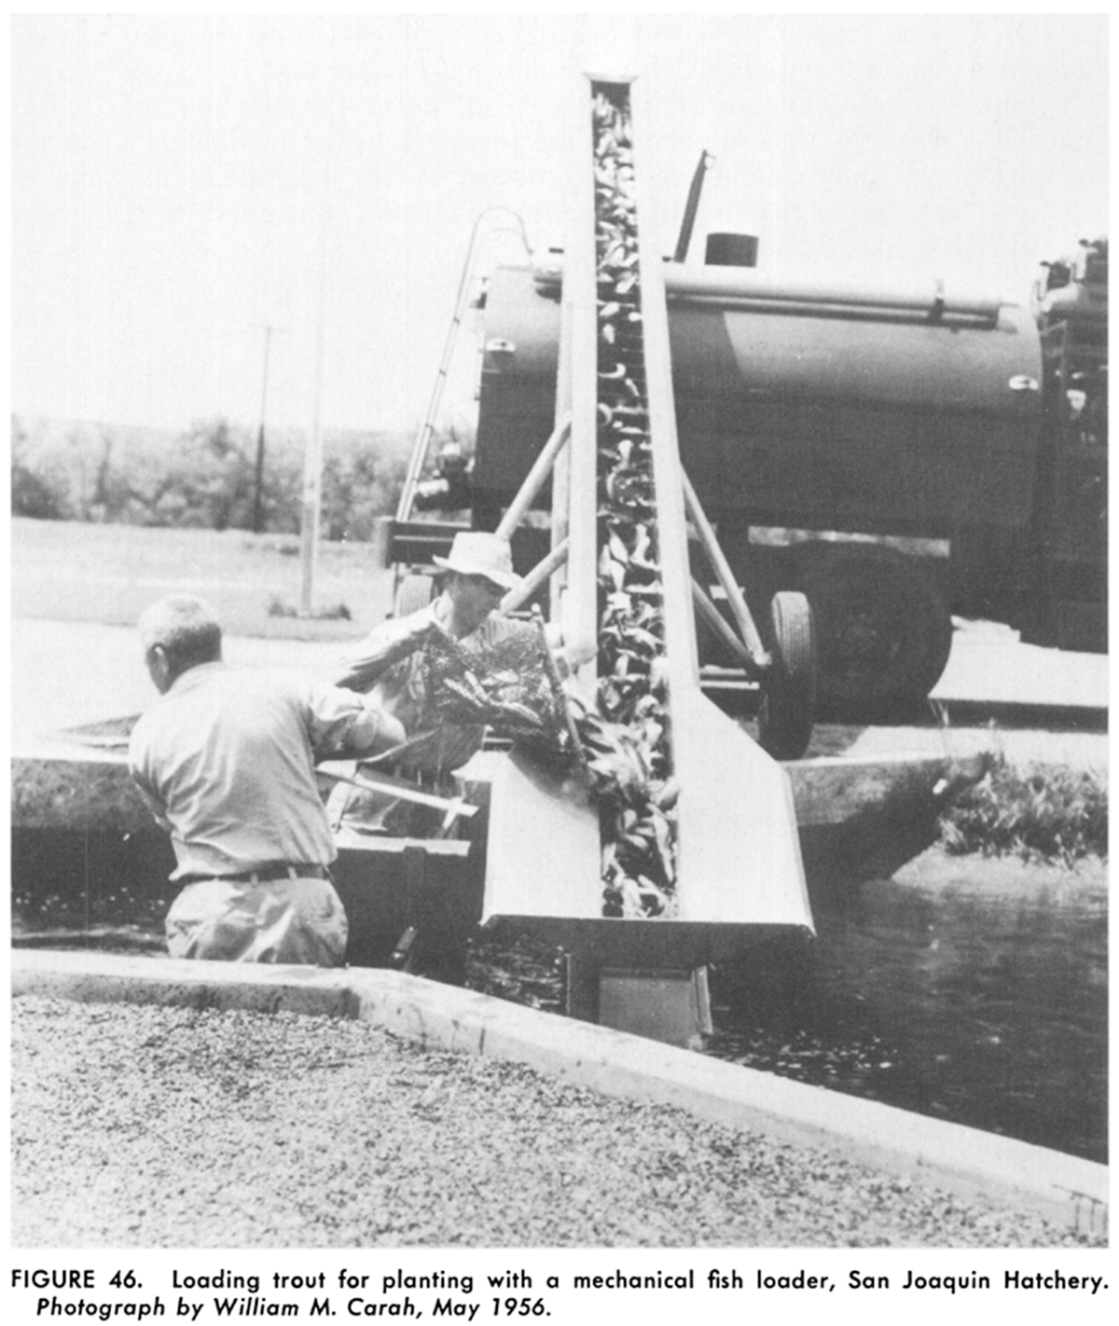 1956 photo of mechanical fish loader